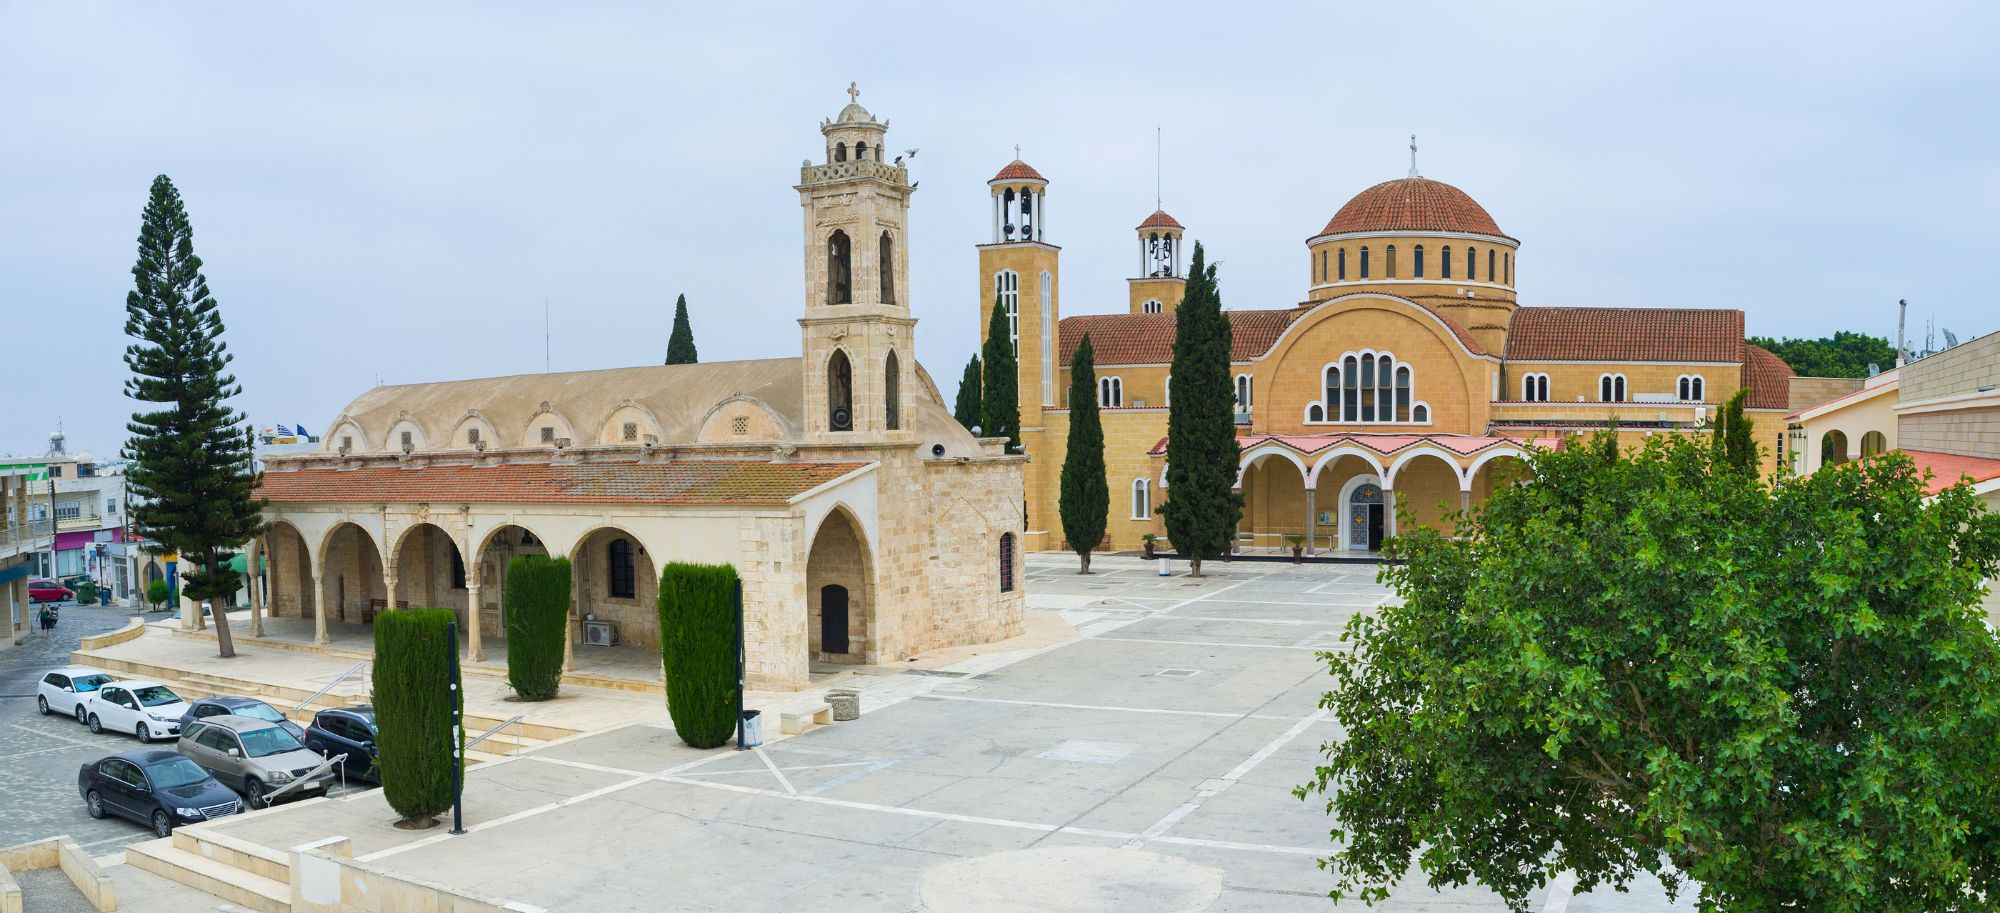 the cathedral squarejpg Nea Ammochostos